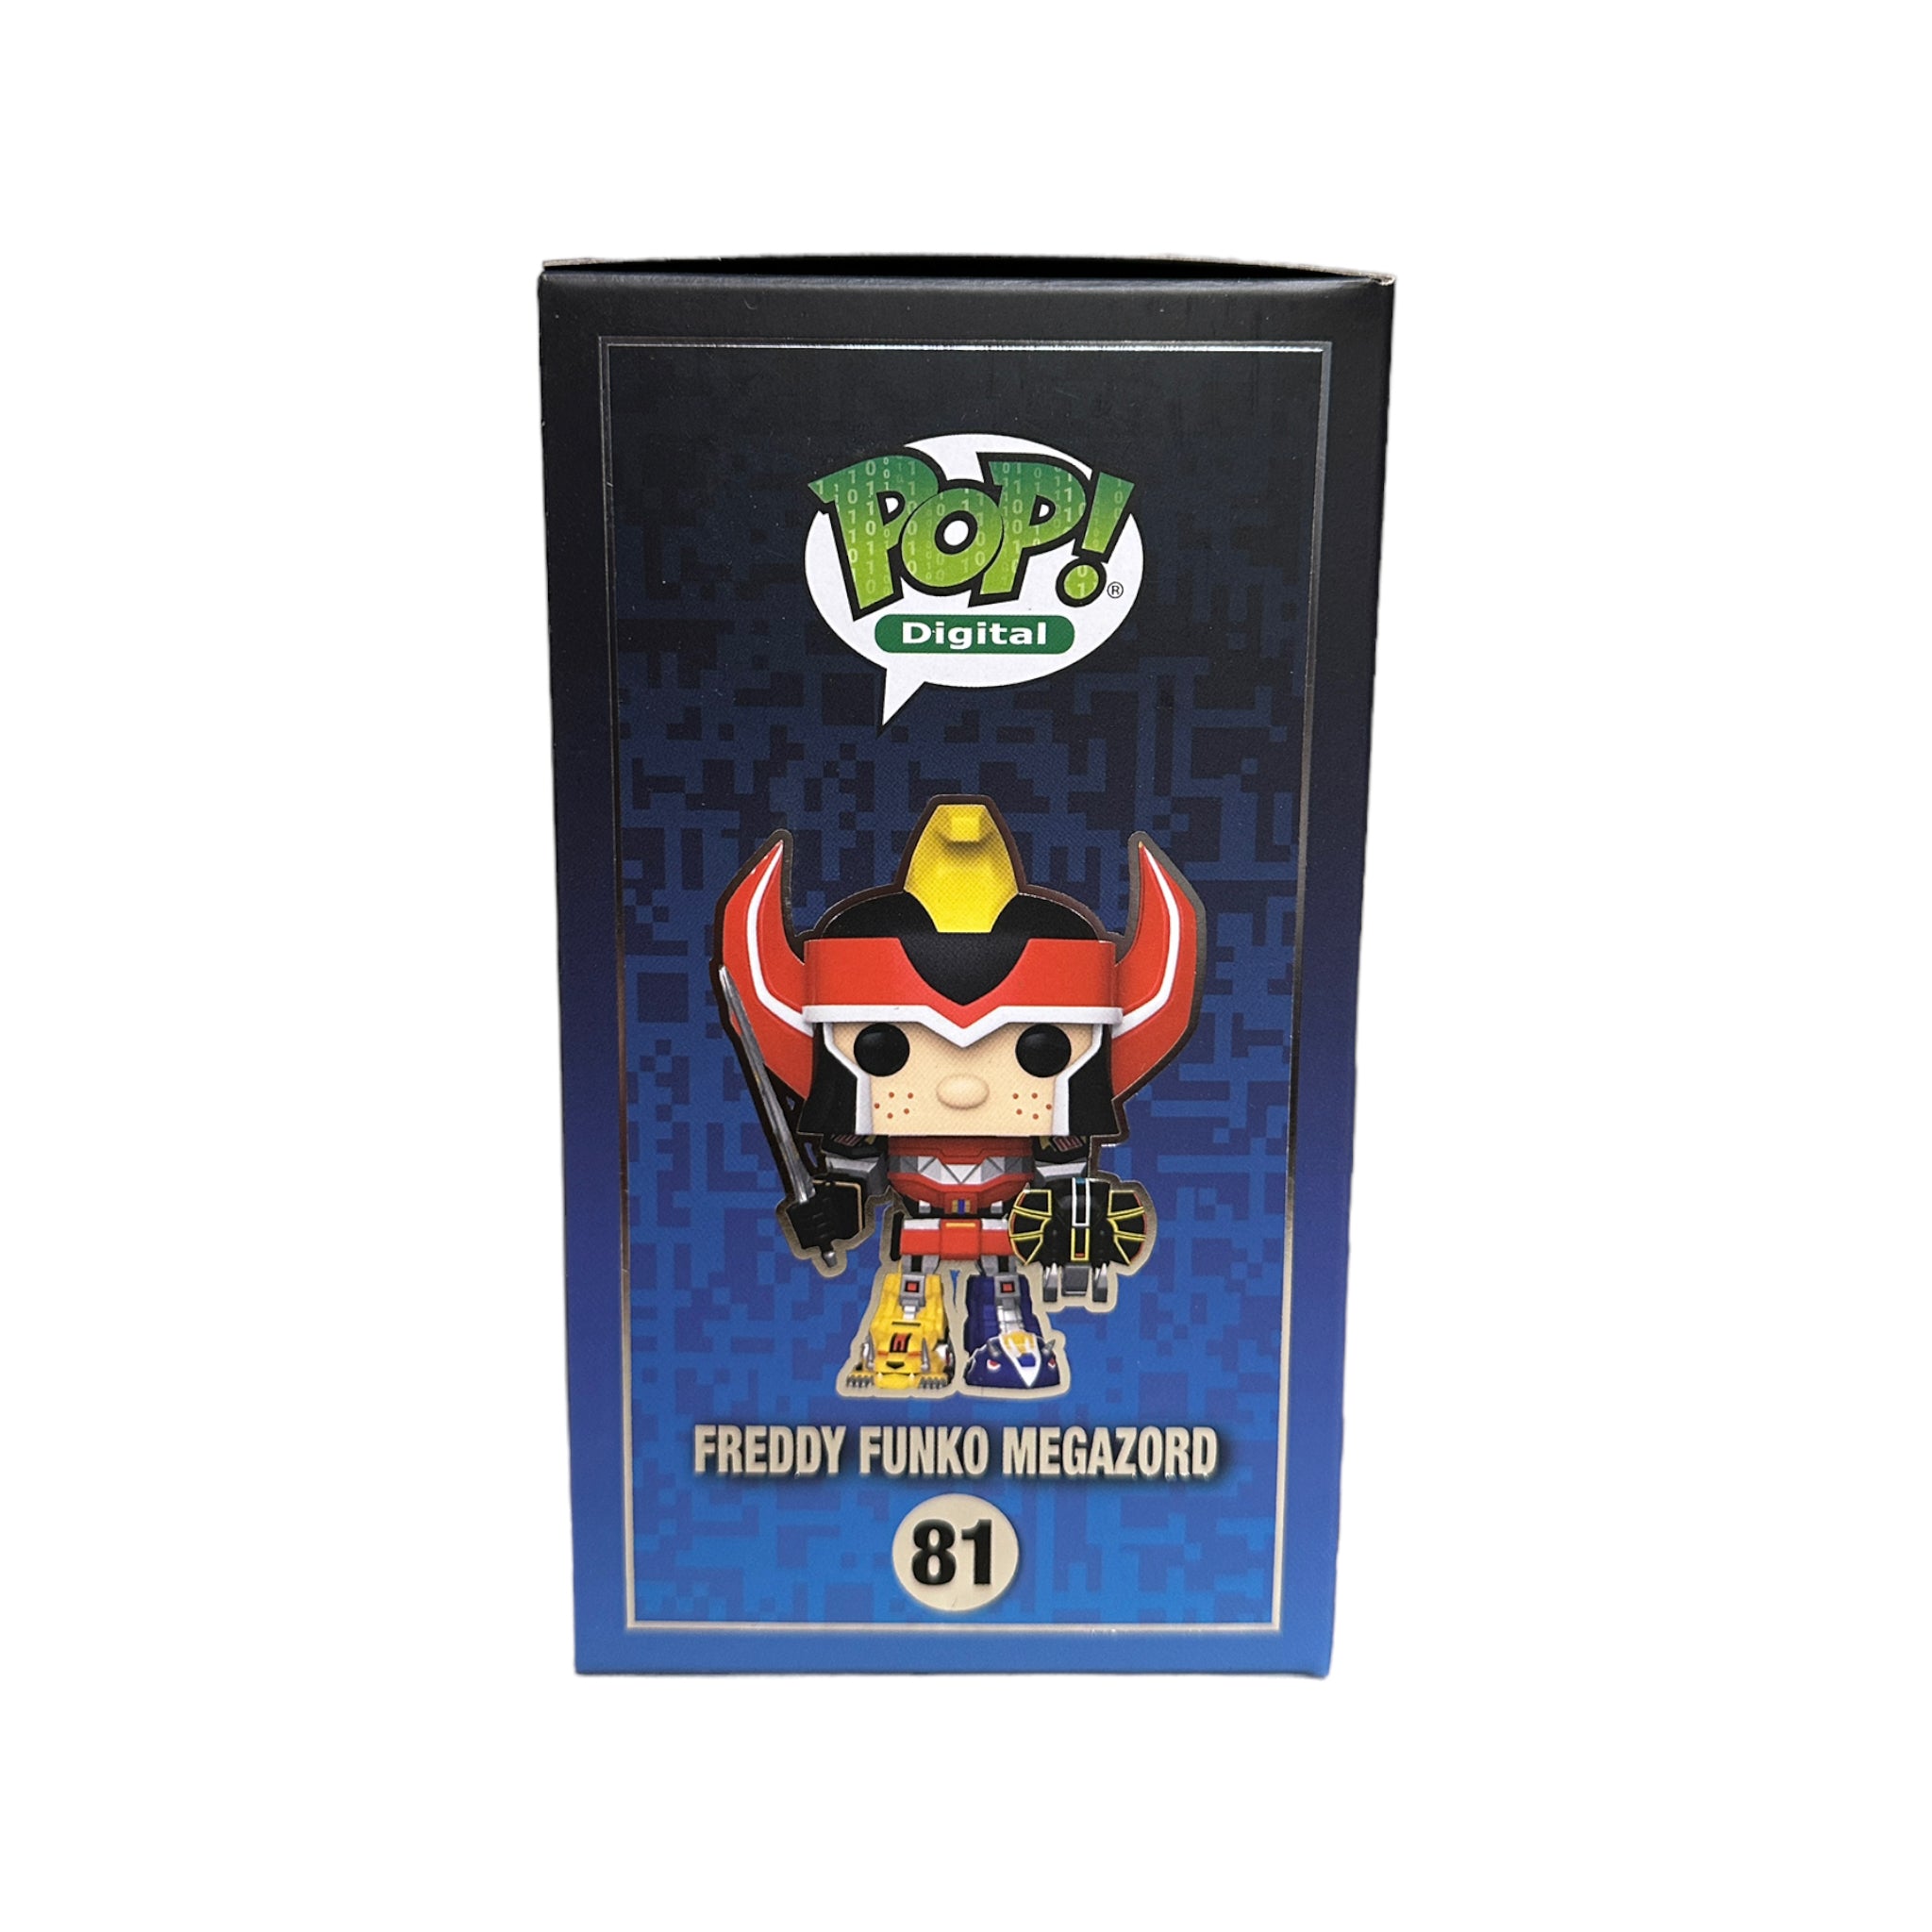 Freddy Funko Megazord #81 Funko Pop! - Mighty Morphin Power Rangers - NFT Release Exclusive LE2400 Pcs - Condition 9.5/10